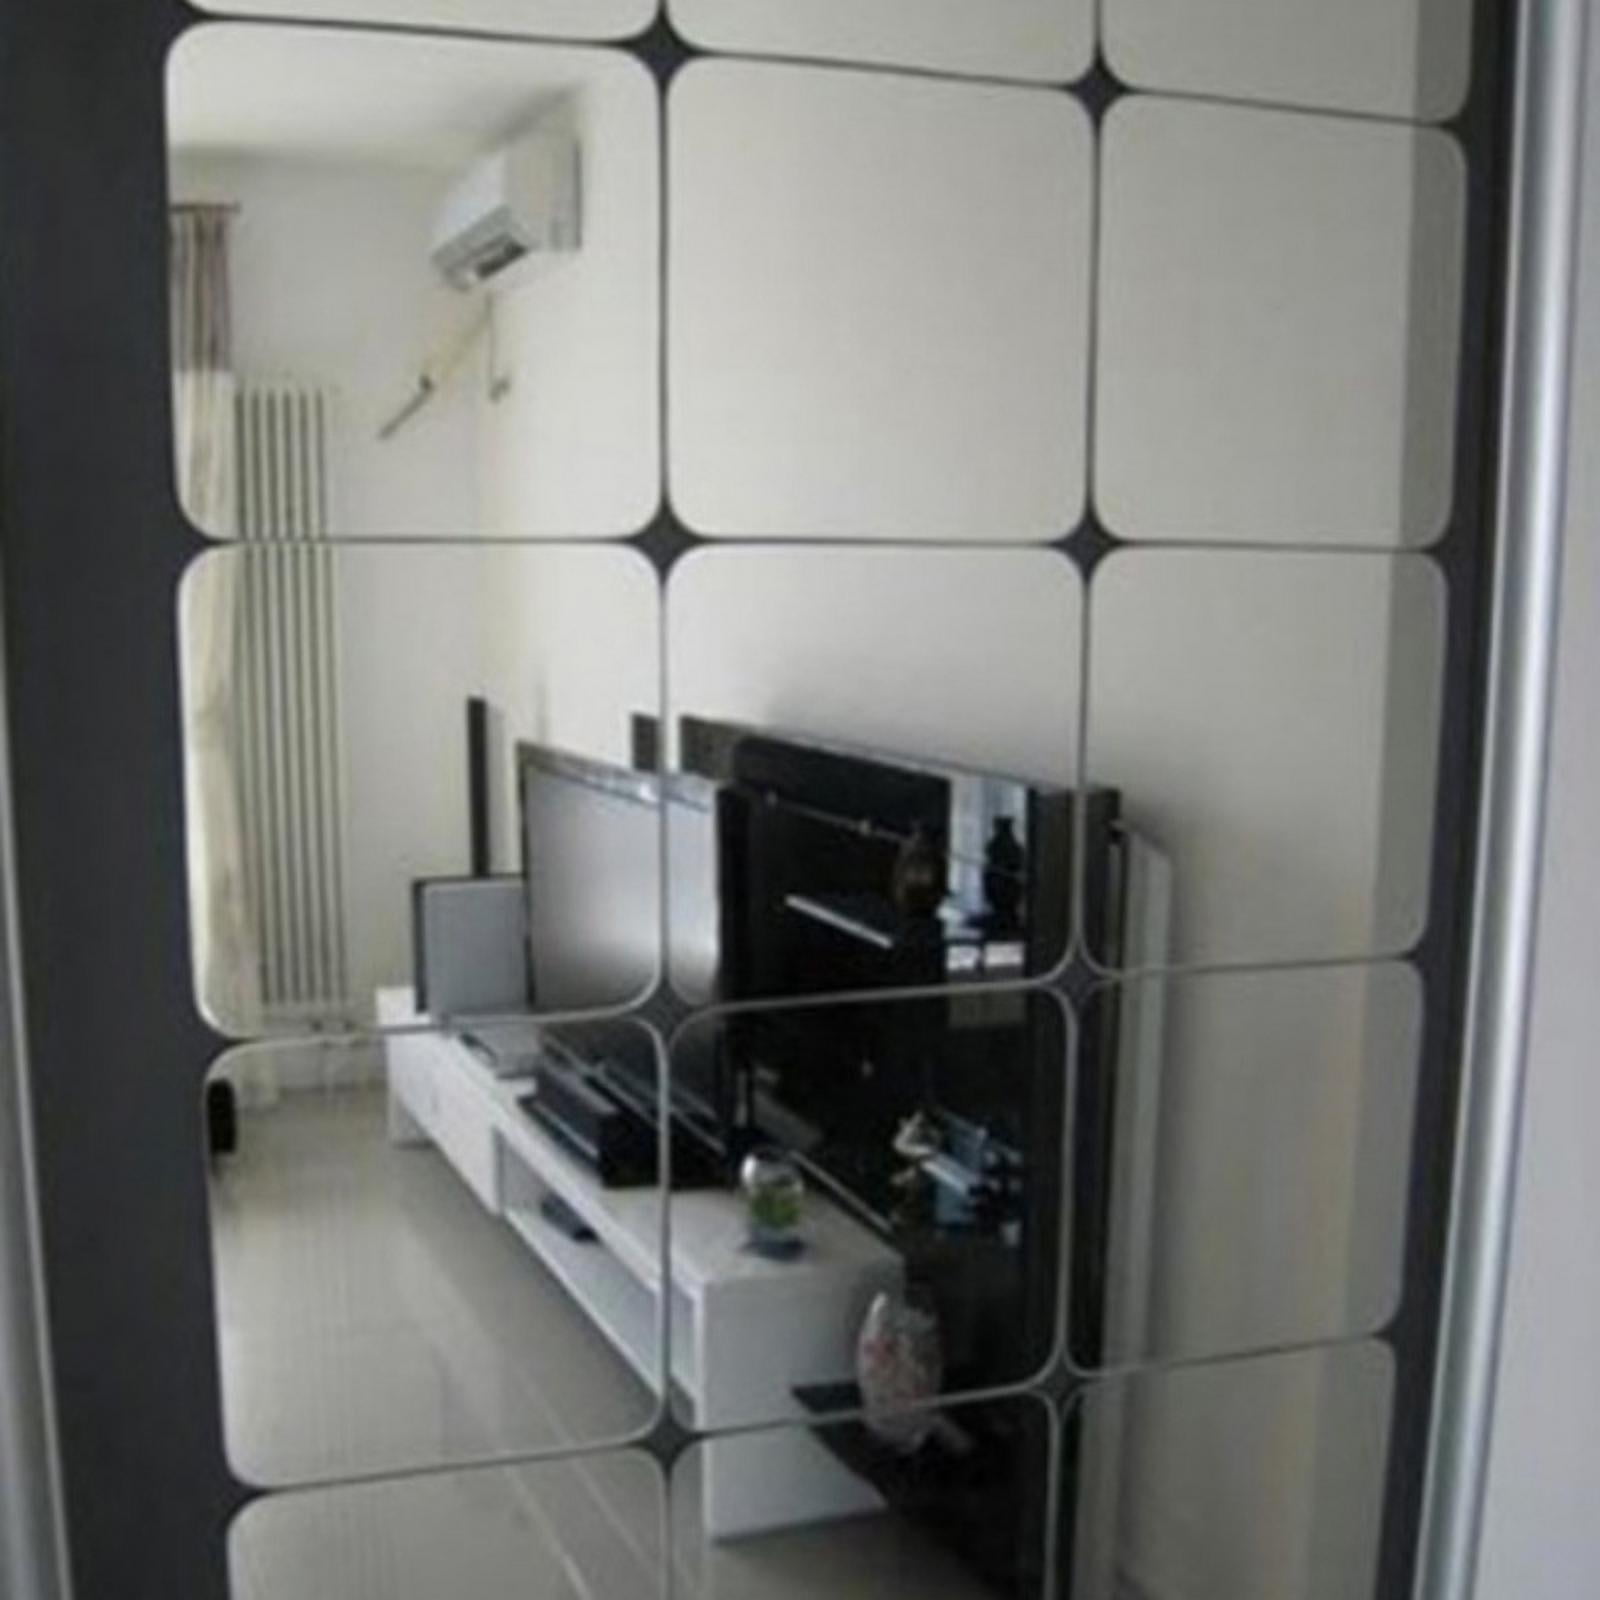 9PC Mirror Tile Wall Sticker Square Self Adhesive Reflective Home Bedroom Decor 